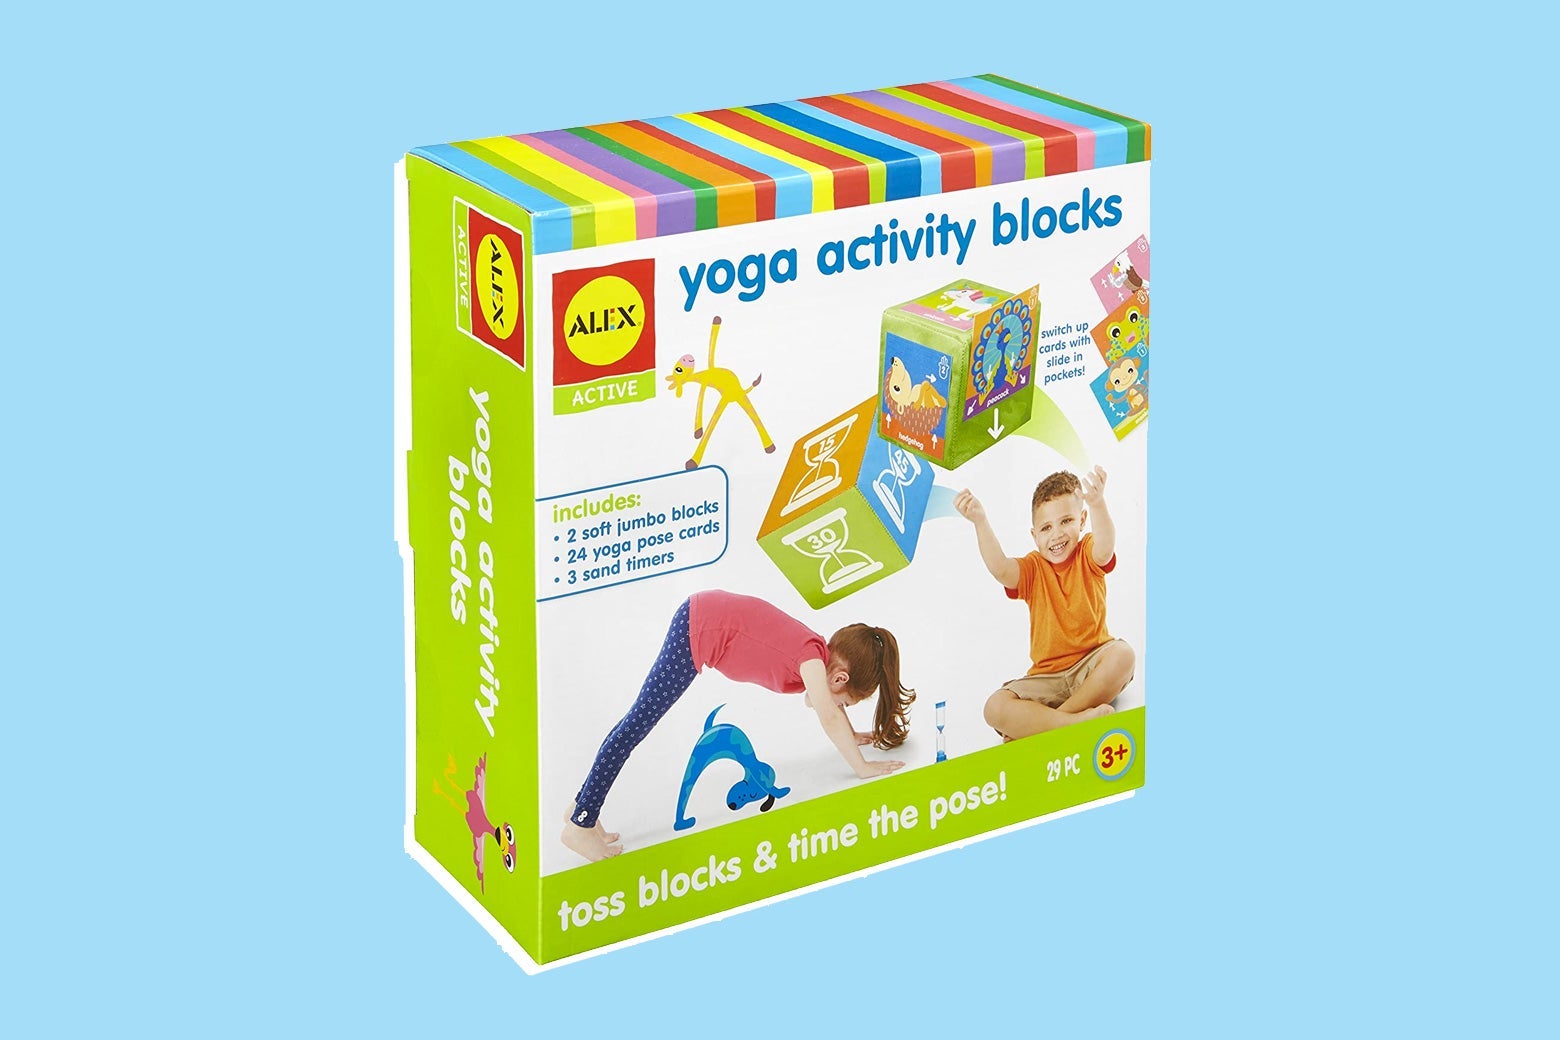 Yoga activity blocks for kids.